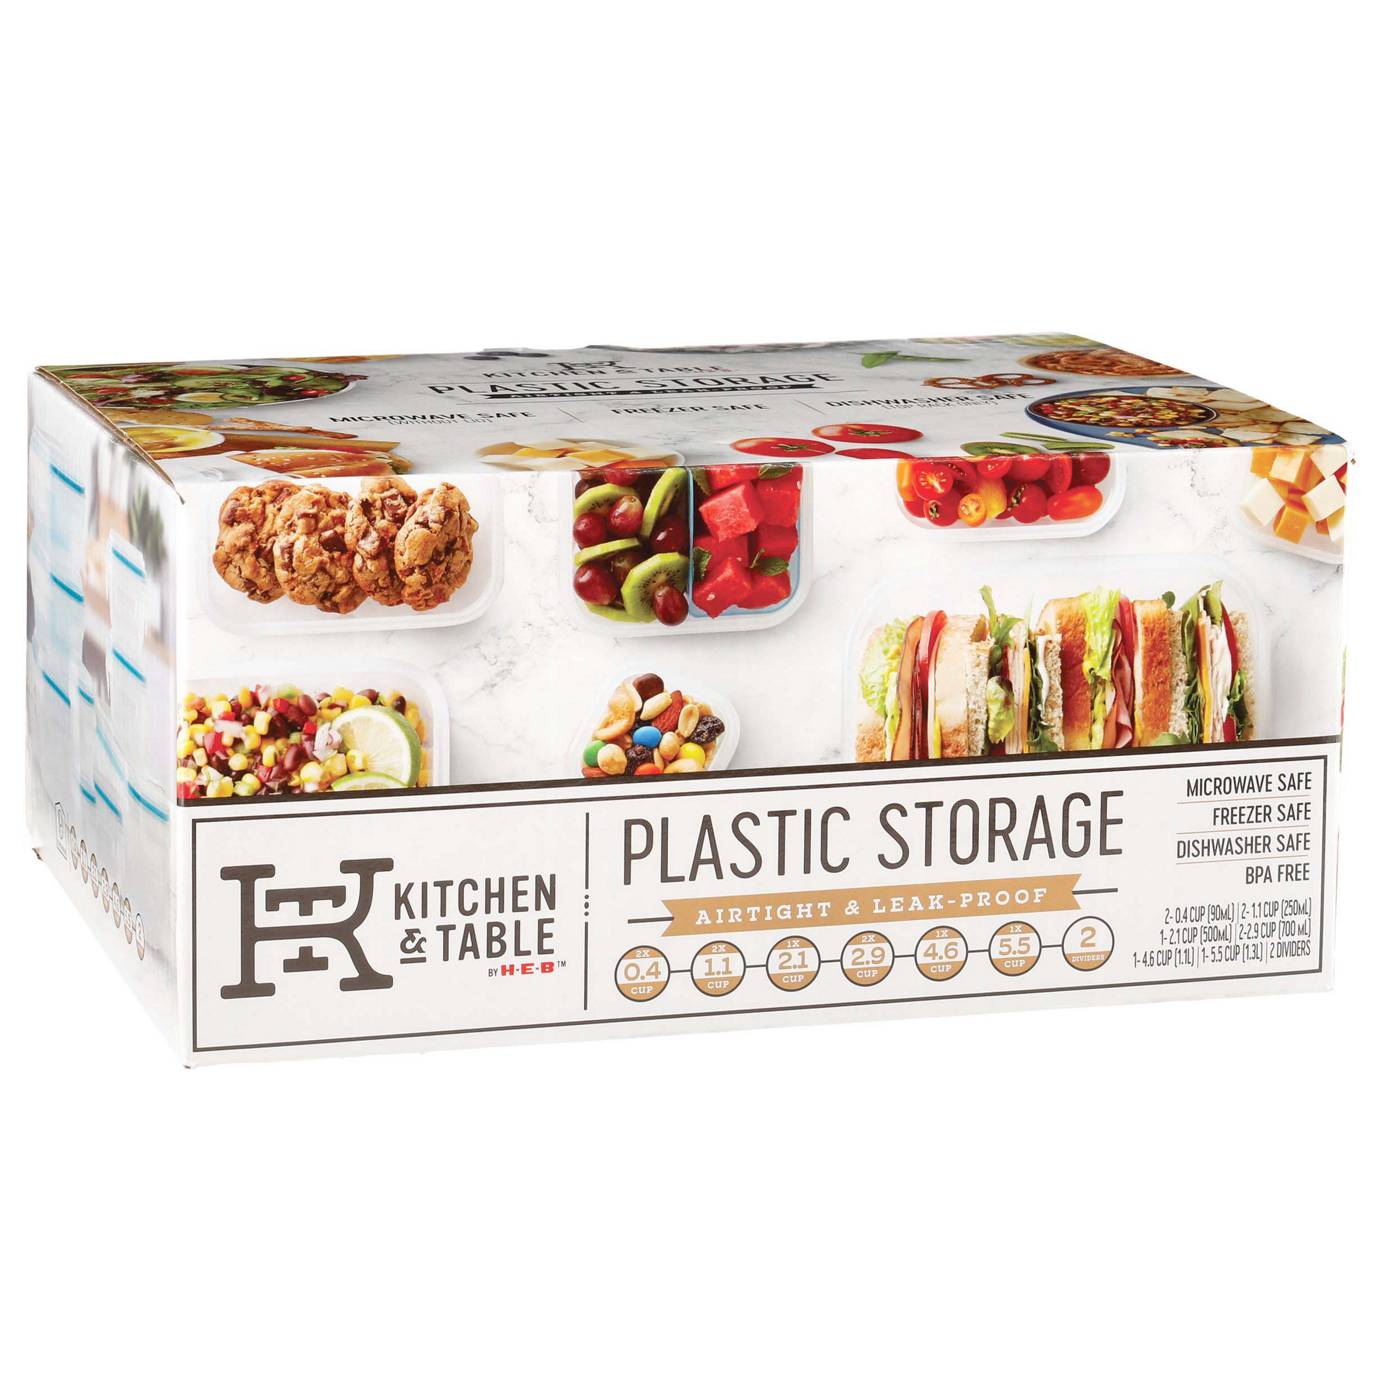 Rubbermaid Premier Container & Lid - Shop Food Storage at H-E-B